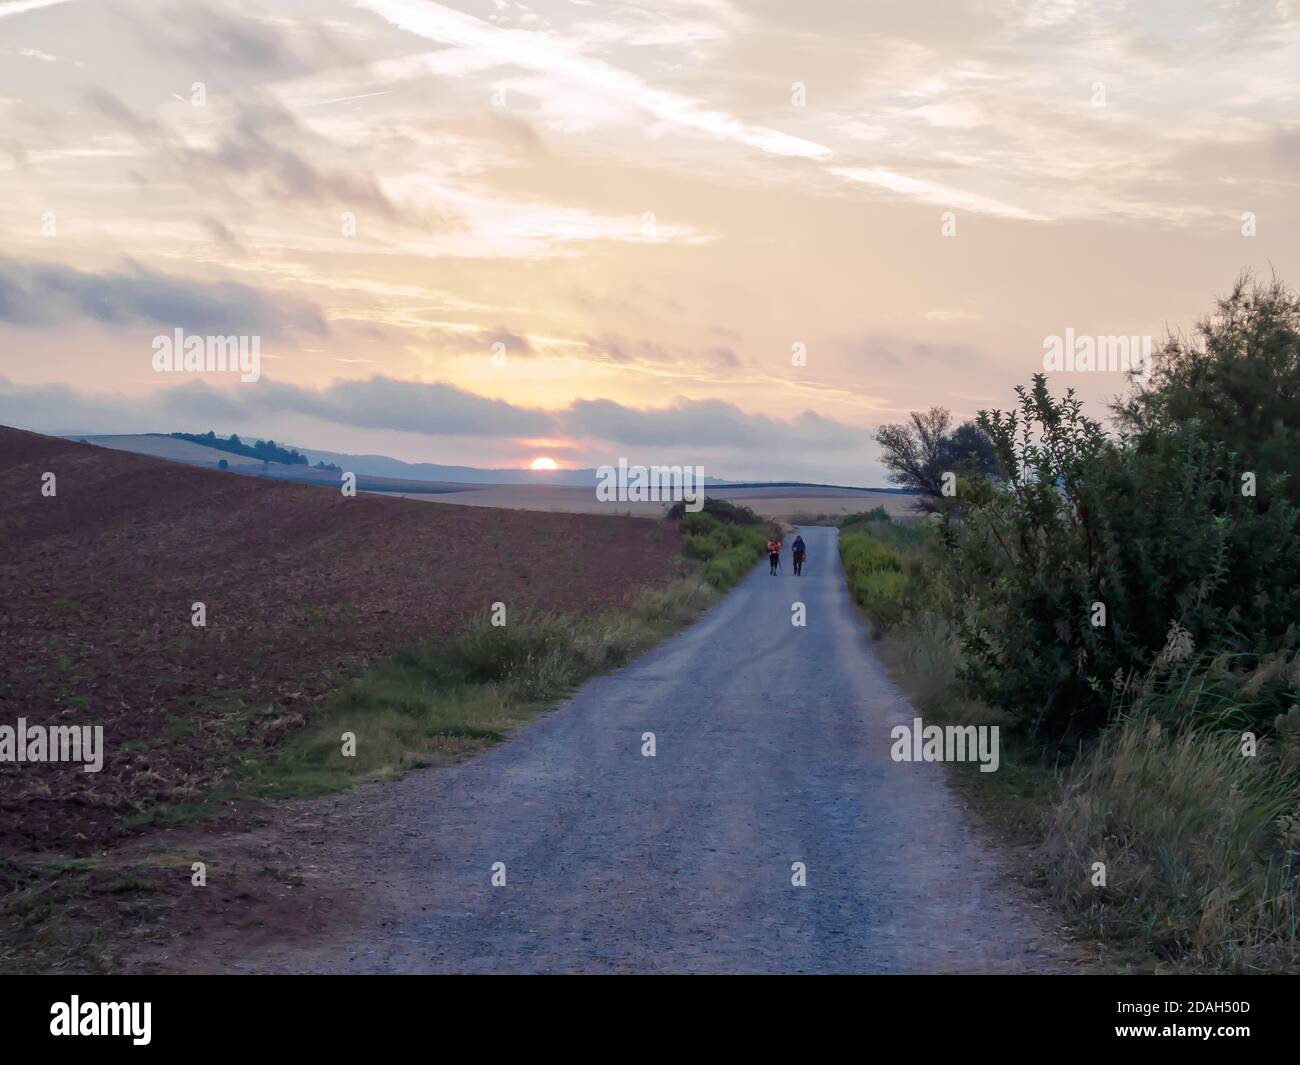 Pilgrims on the road at sunrise - Villamayor de Monjardin, Navarre, Spain Stock Photo